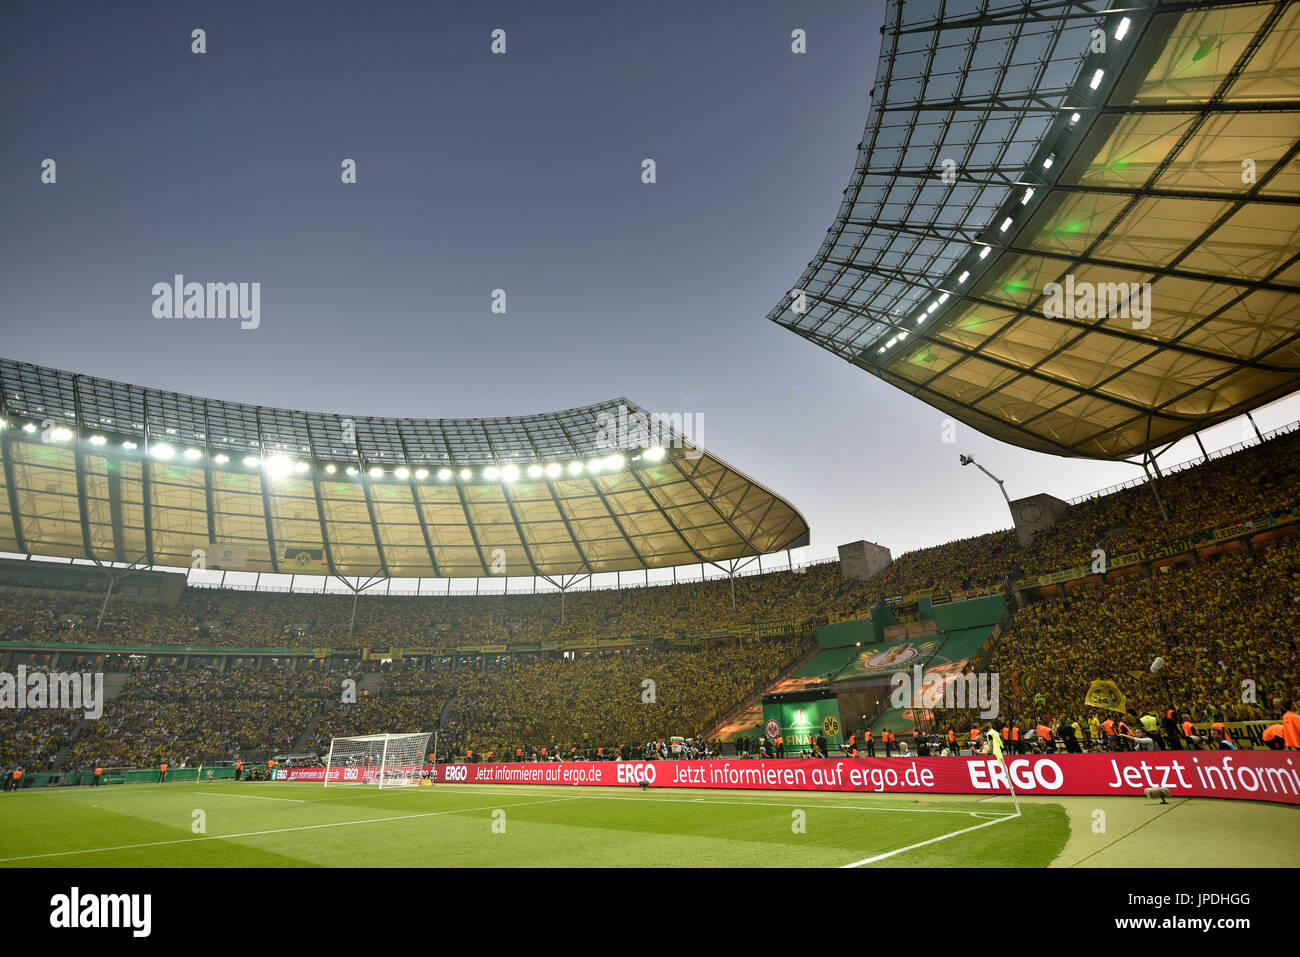 Overview, Blue Hour, DFB-Pokalfinale, Olympiastadion Berlin, Germany Stock Photo